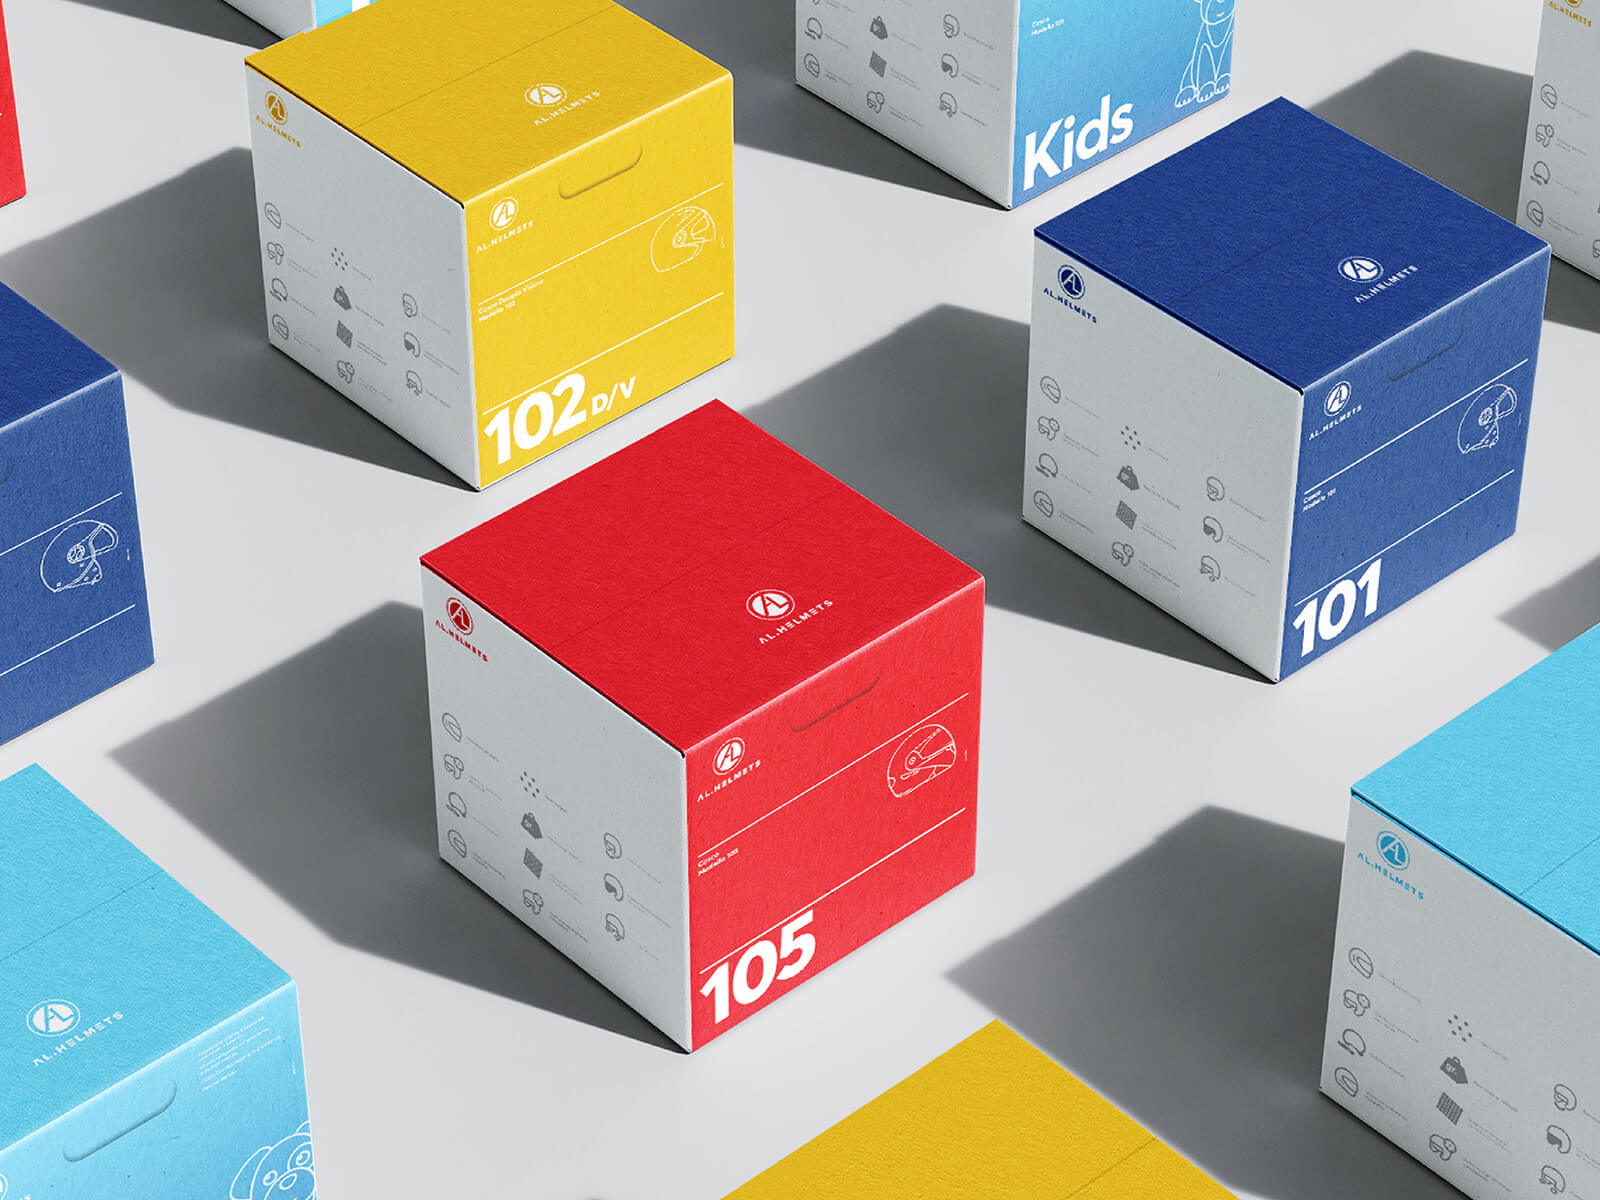 AL Rappresentanze Branding and Packaging Design by Studio K95